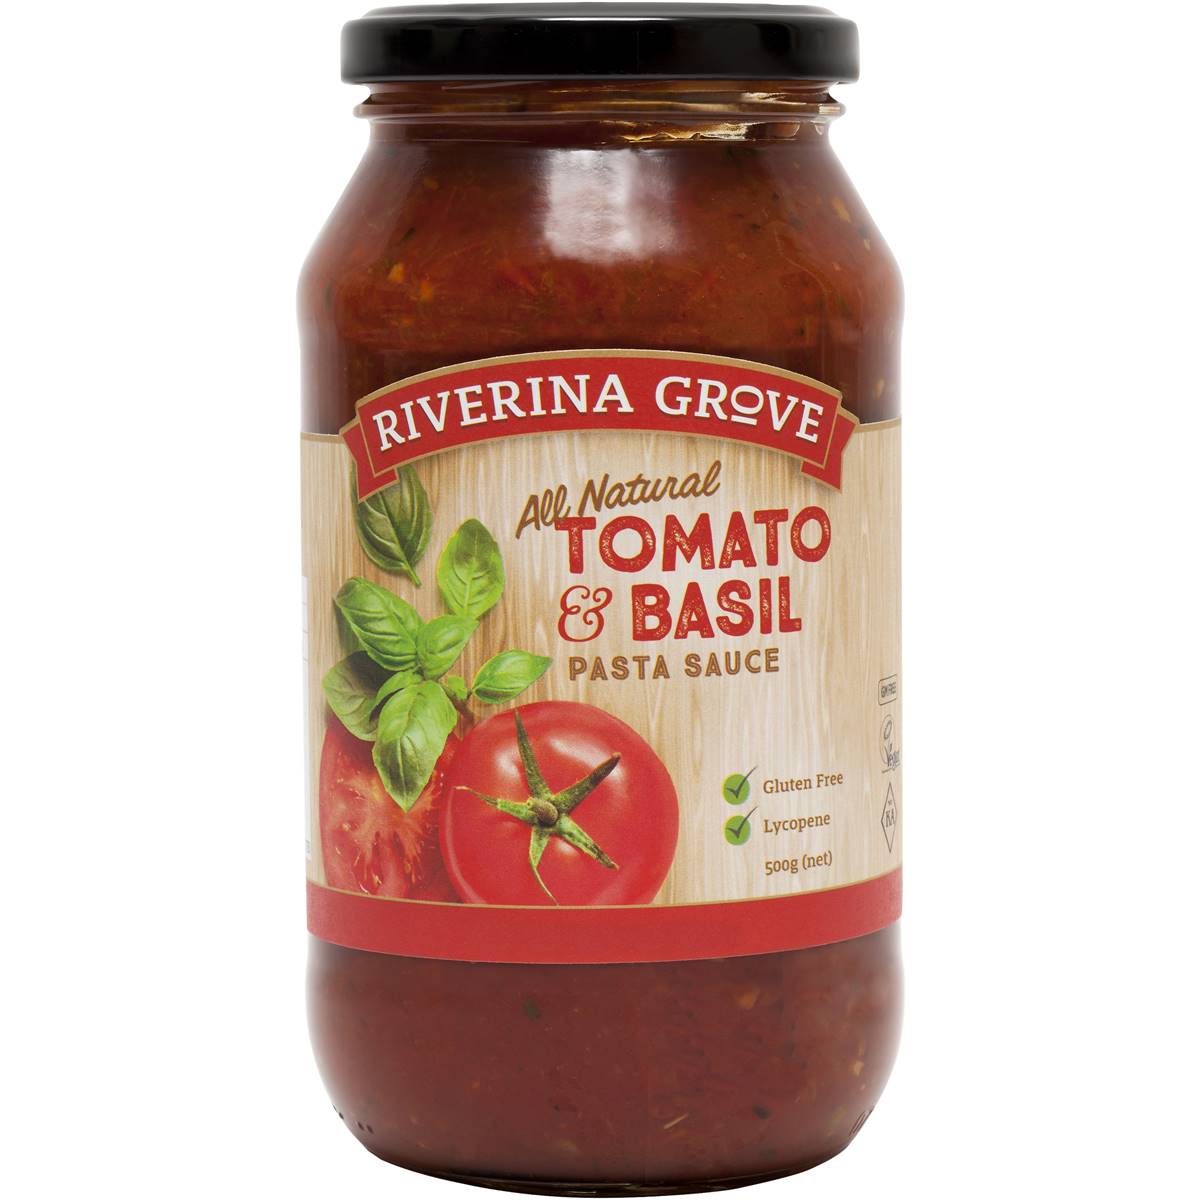 Riverina Grove Pasta Sauce Tomato & Basil 500g